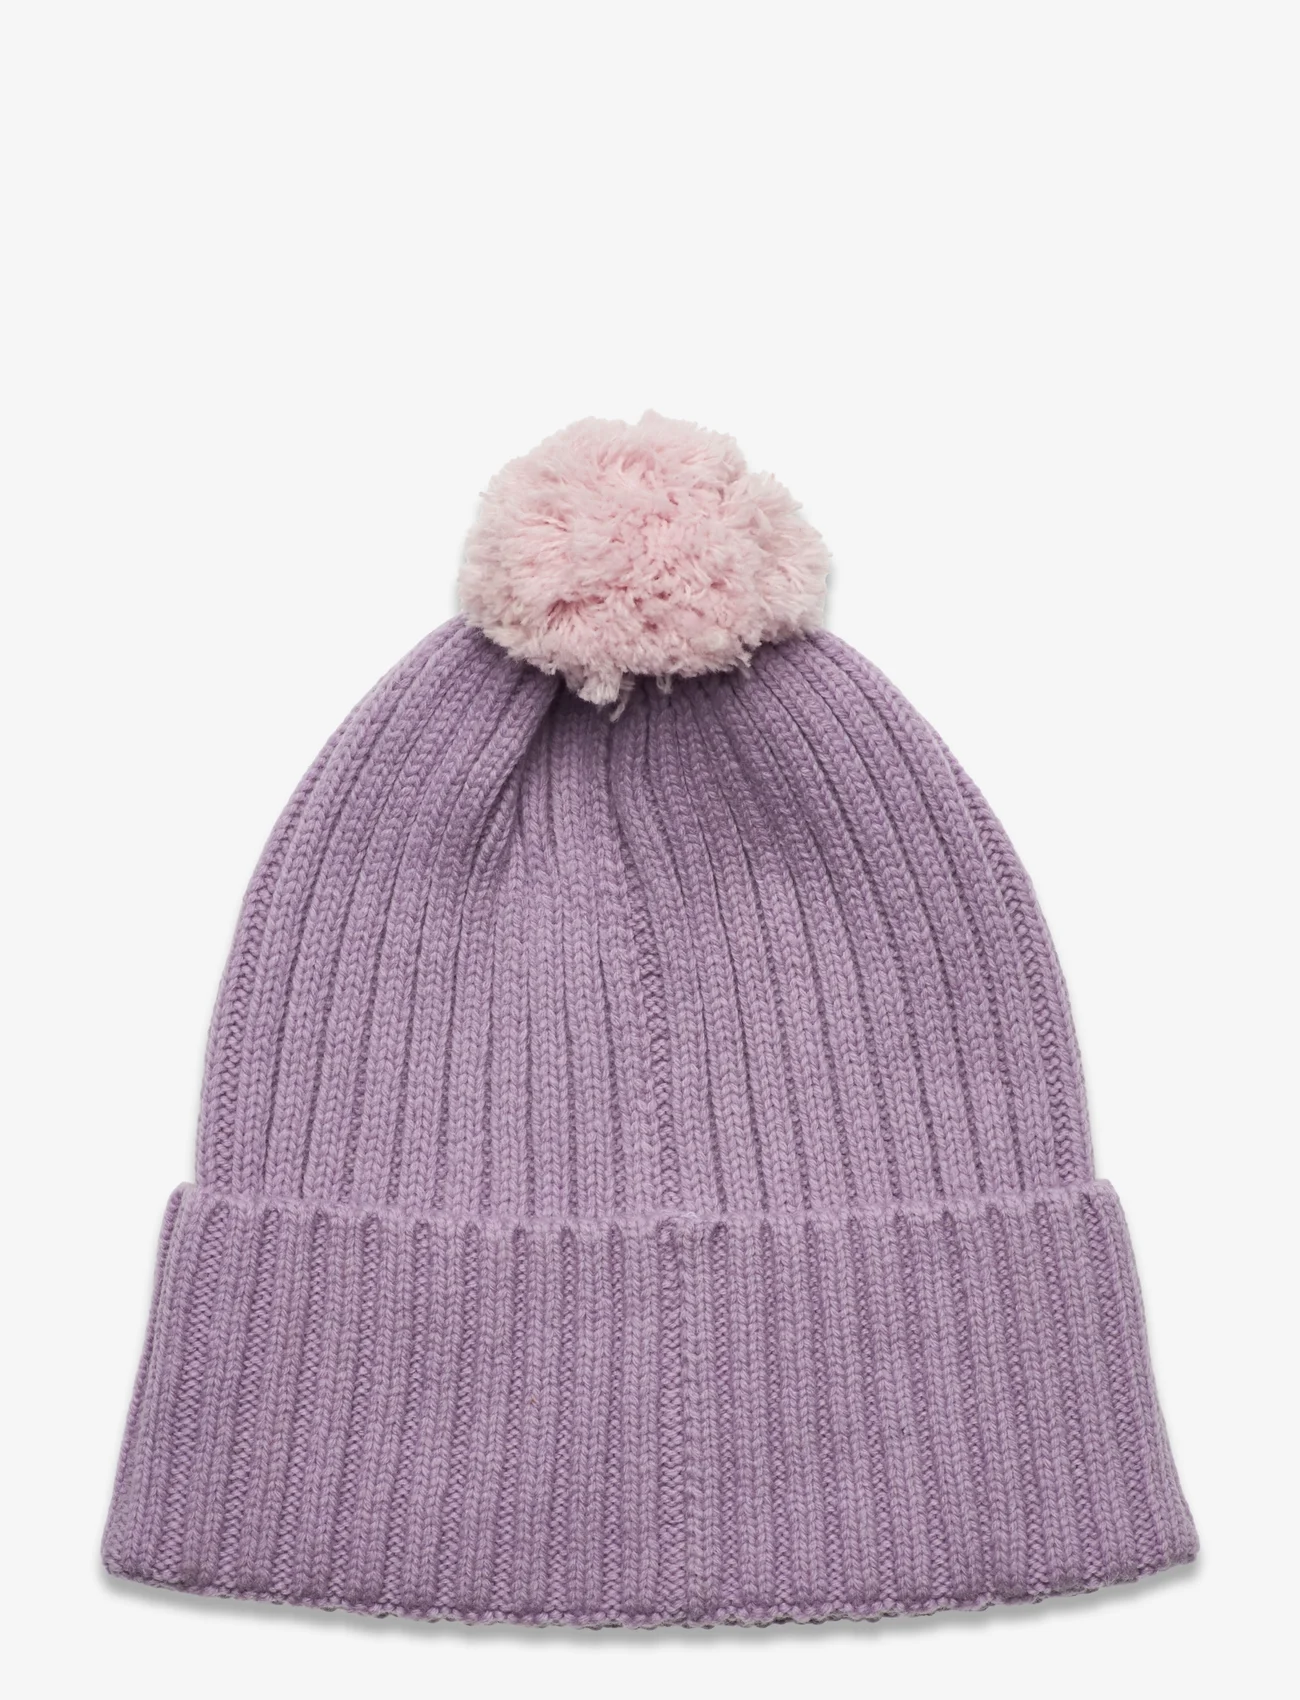 Reima - Beanie, Topsu - winter hats - lilac amethyst - 1